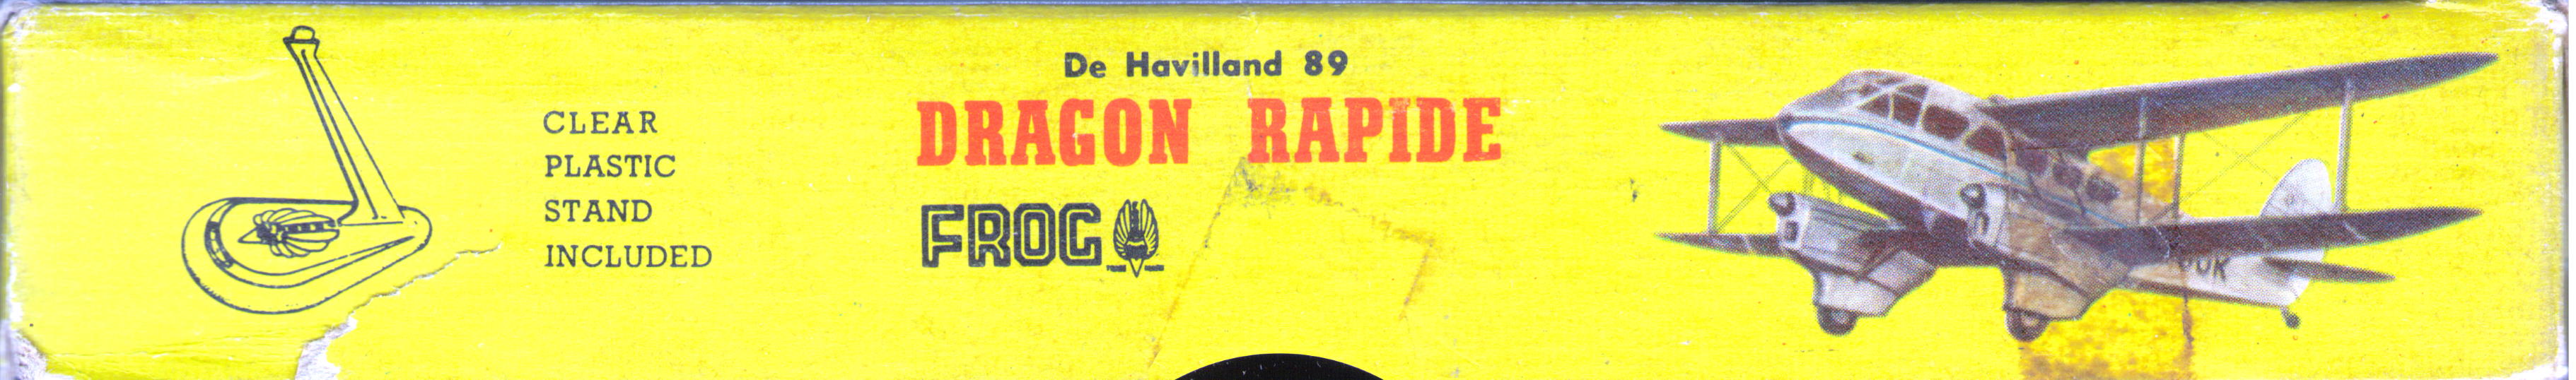 Коробка FROG 399P de Havilland Dragon Rapide, IMA, 1959